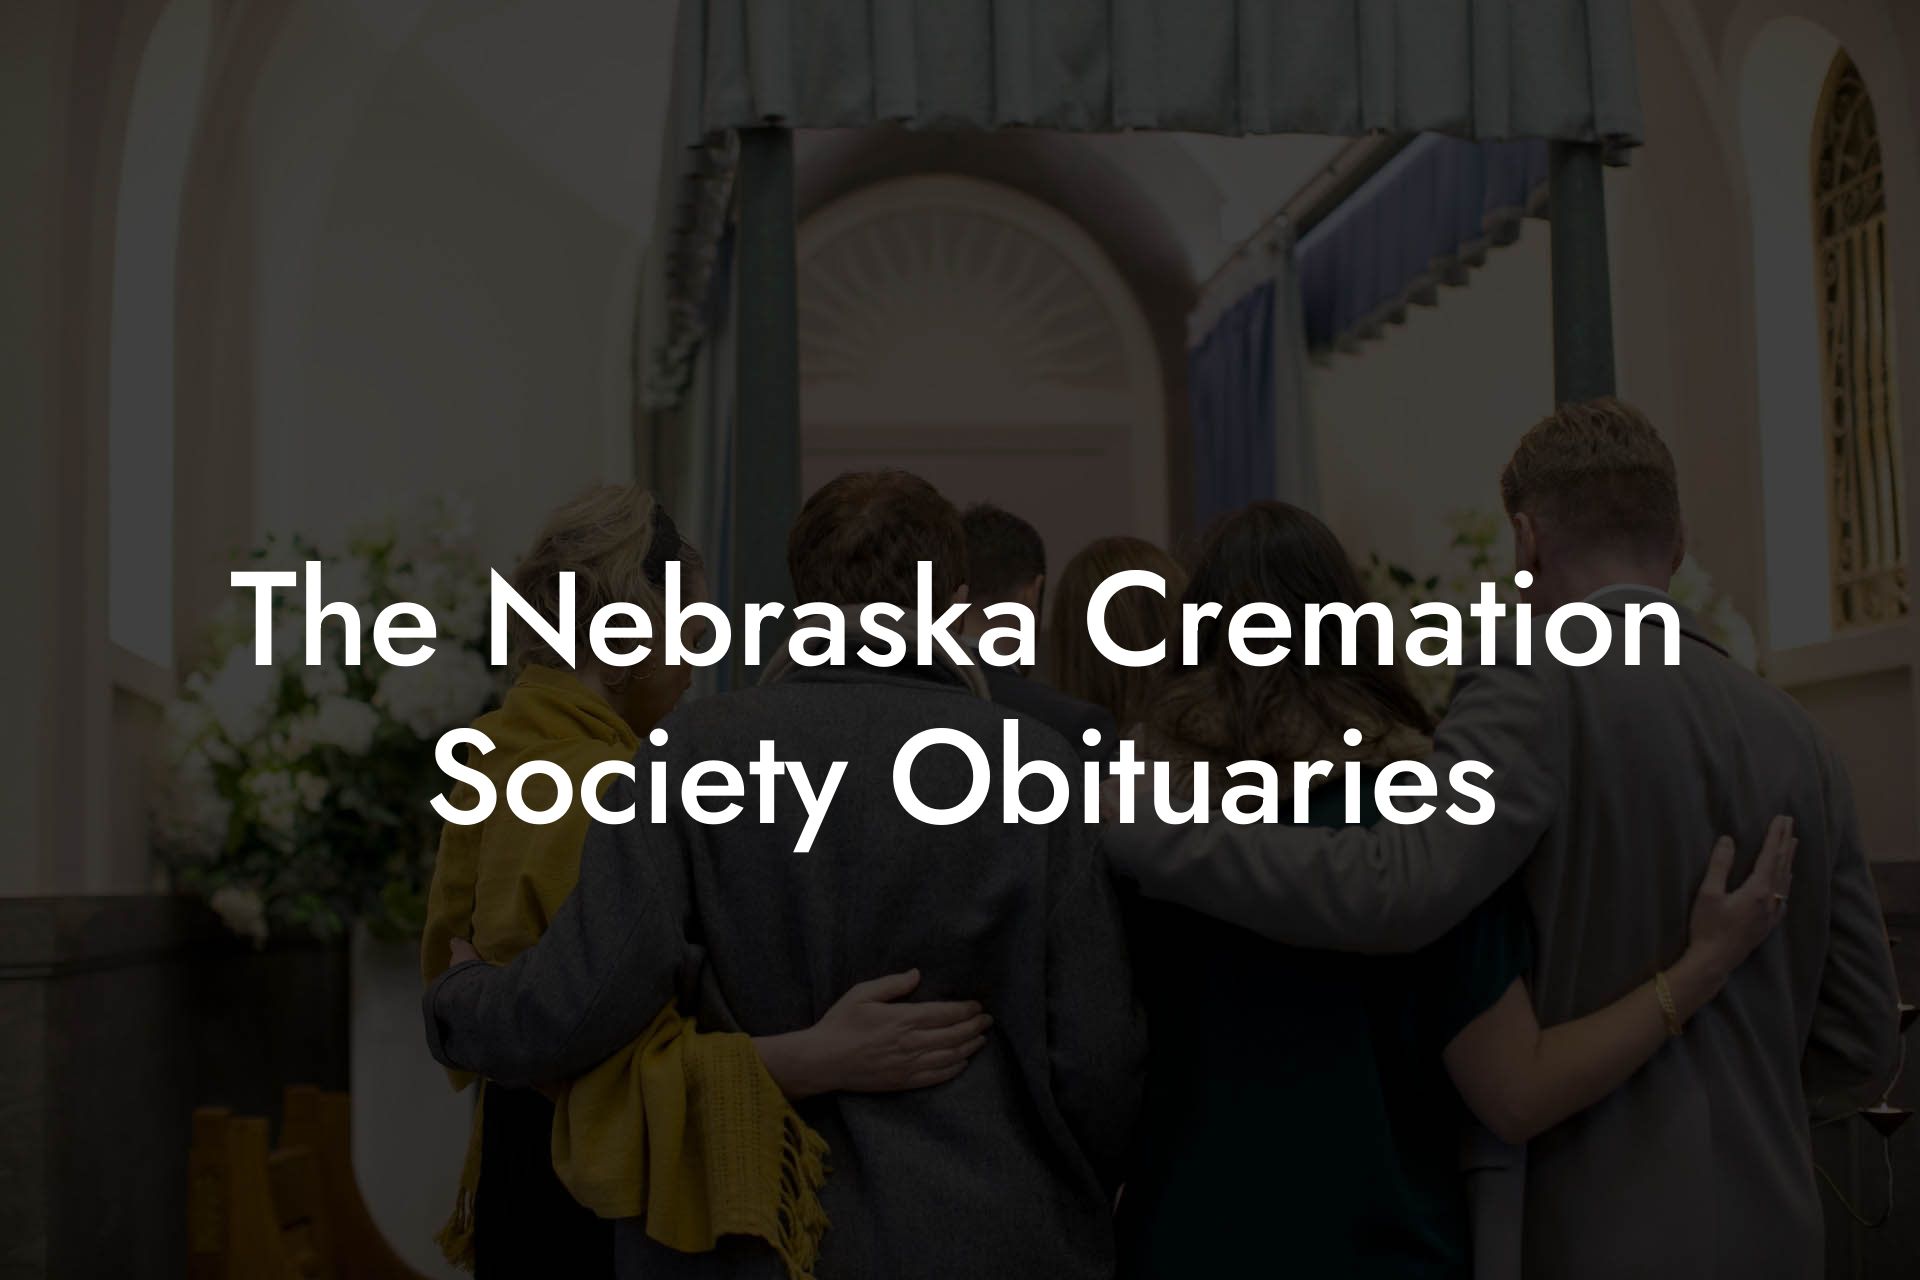 The Nebraska Cremation Society Obituaries